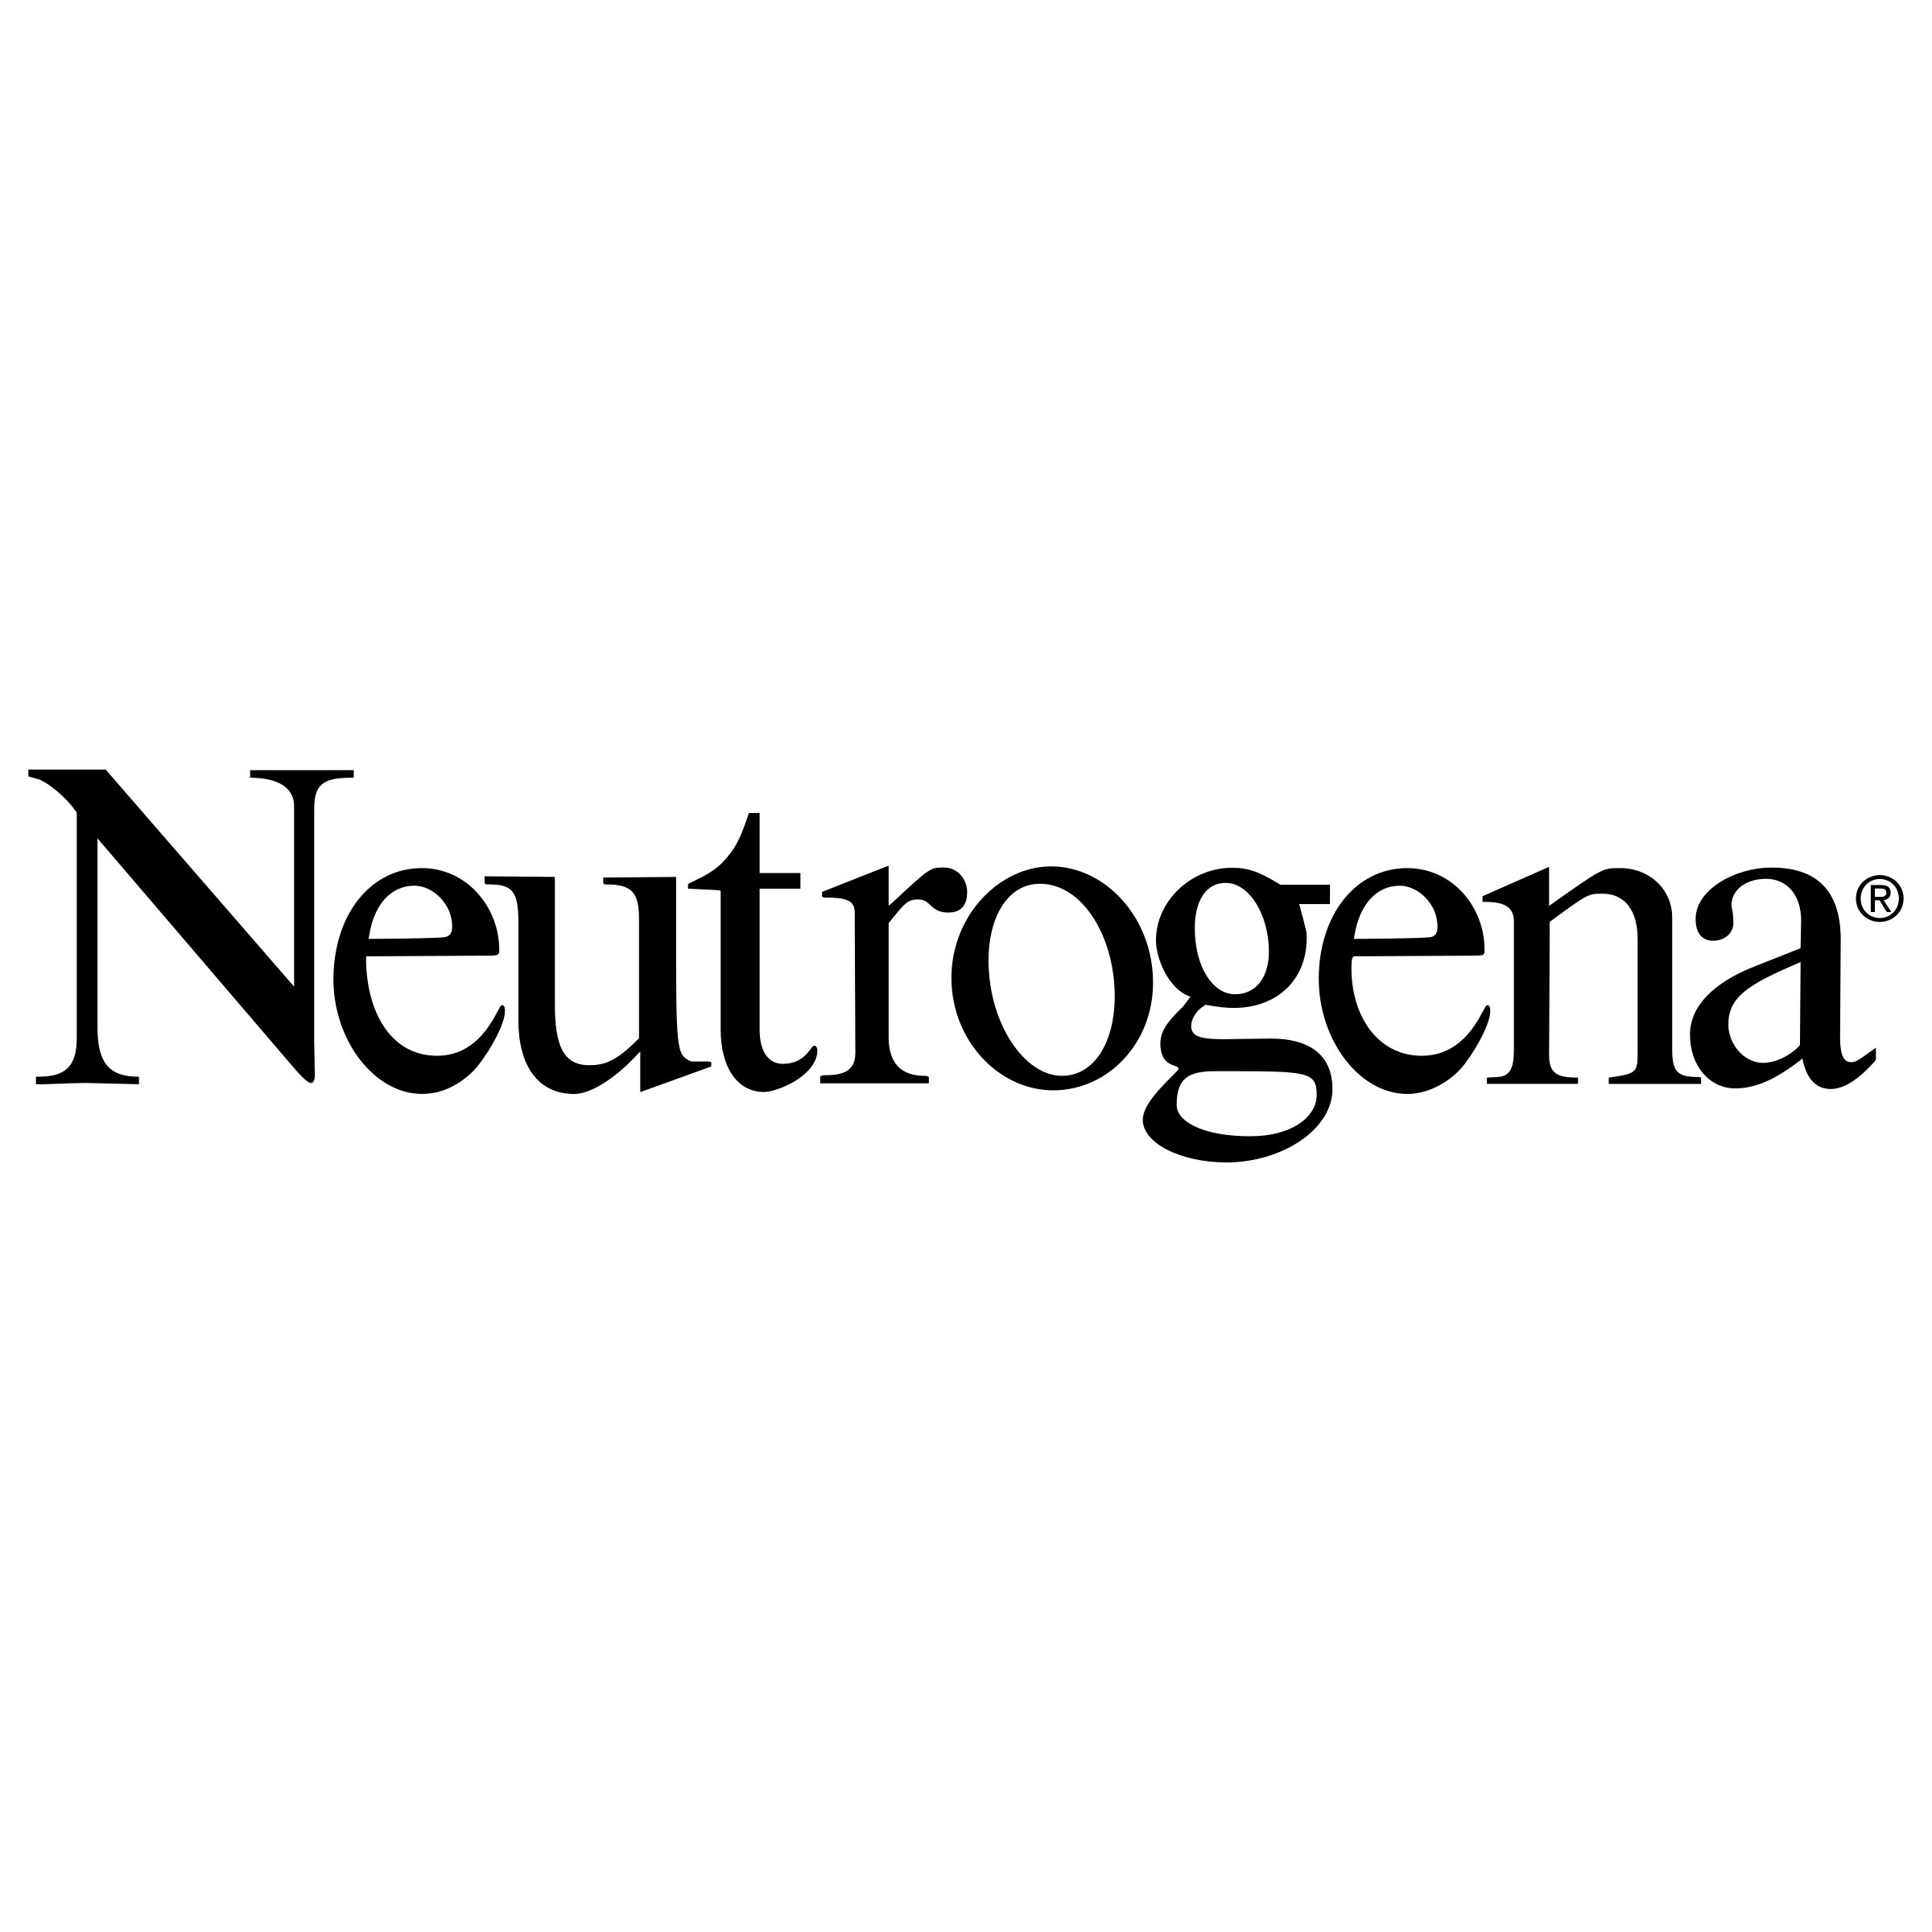 neutrogena-1-logo-png-transparent.png